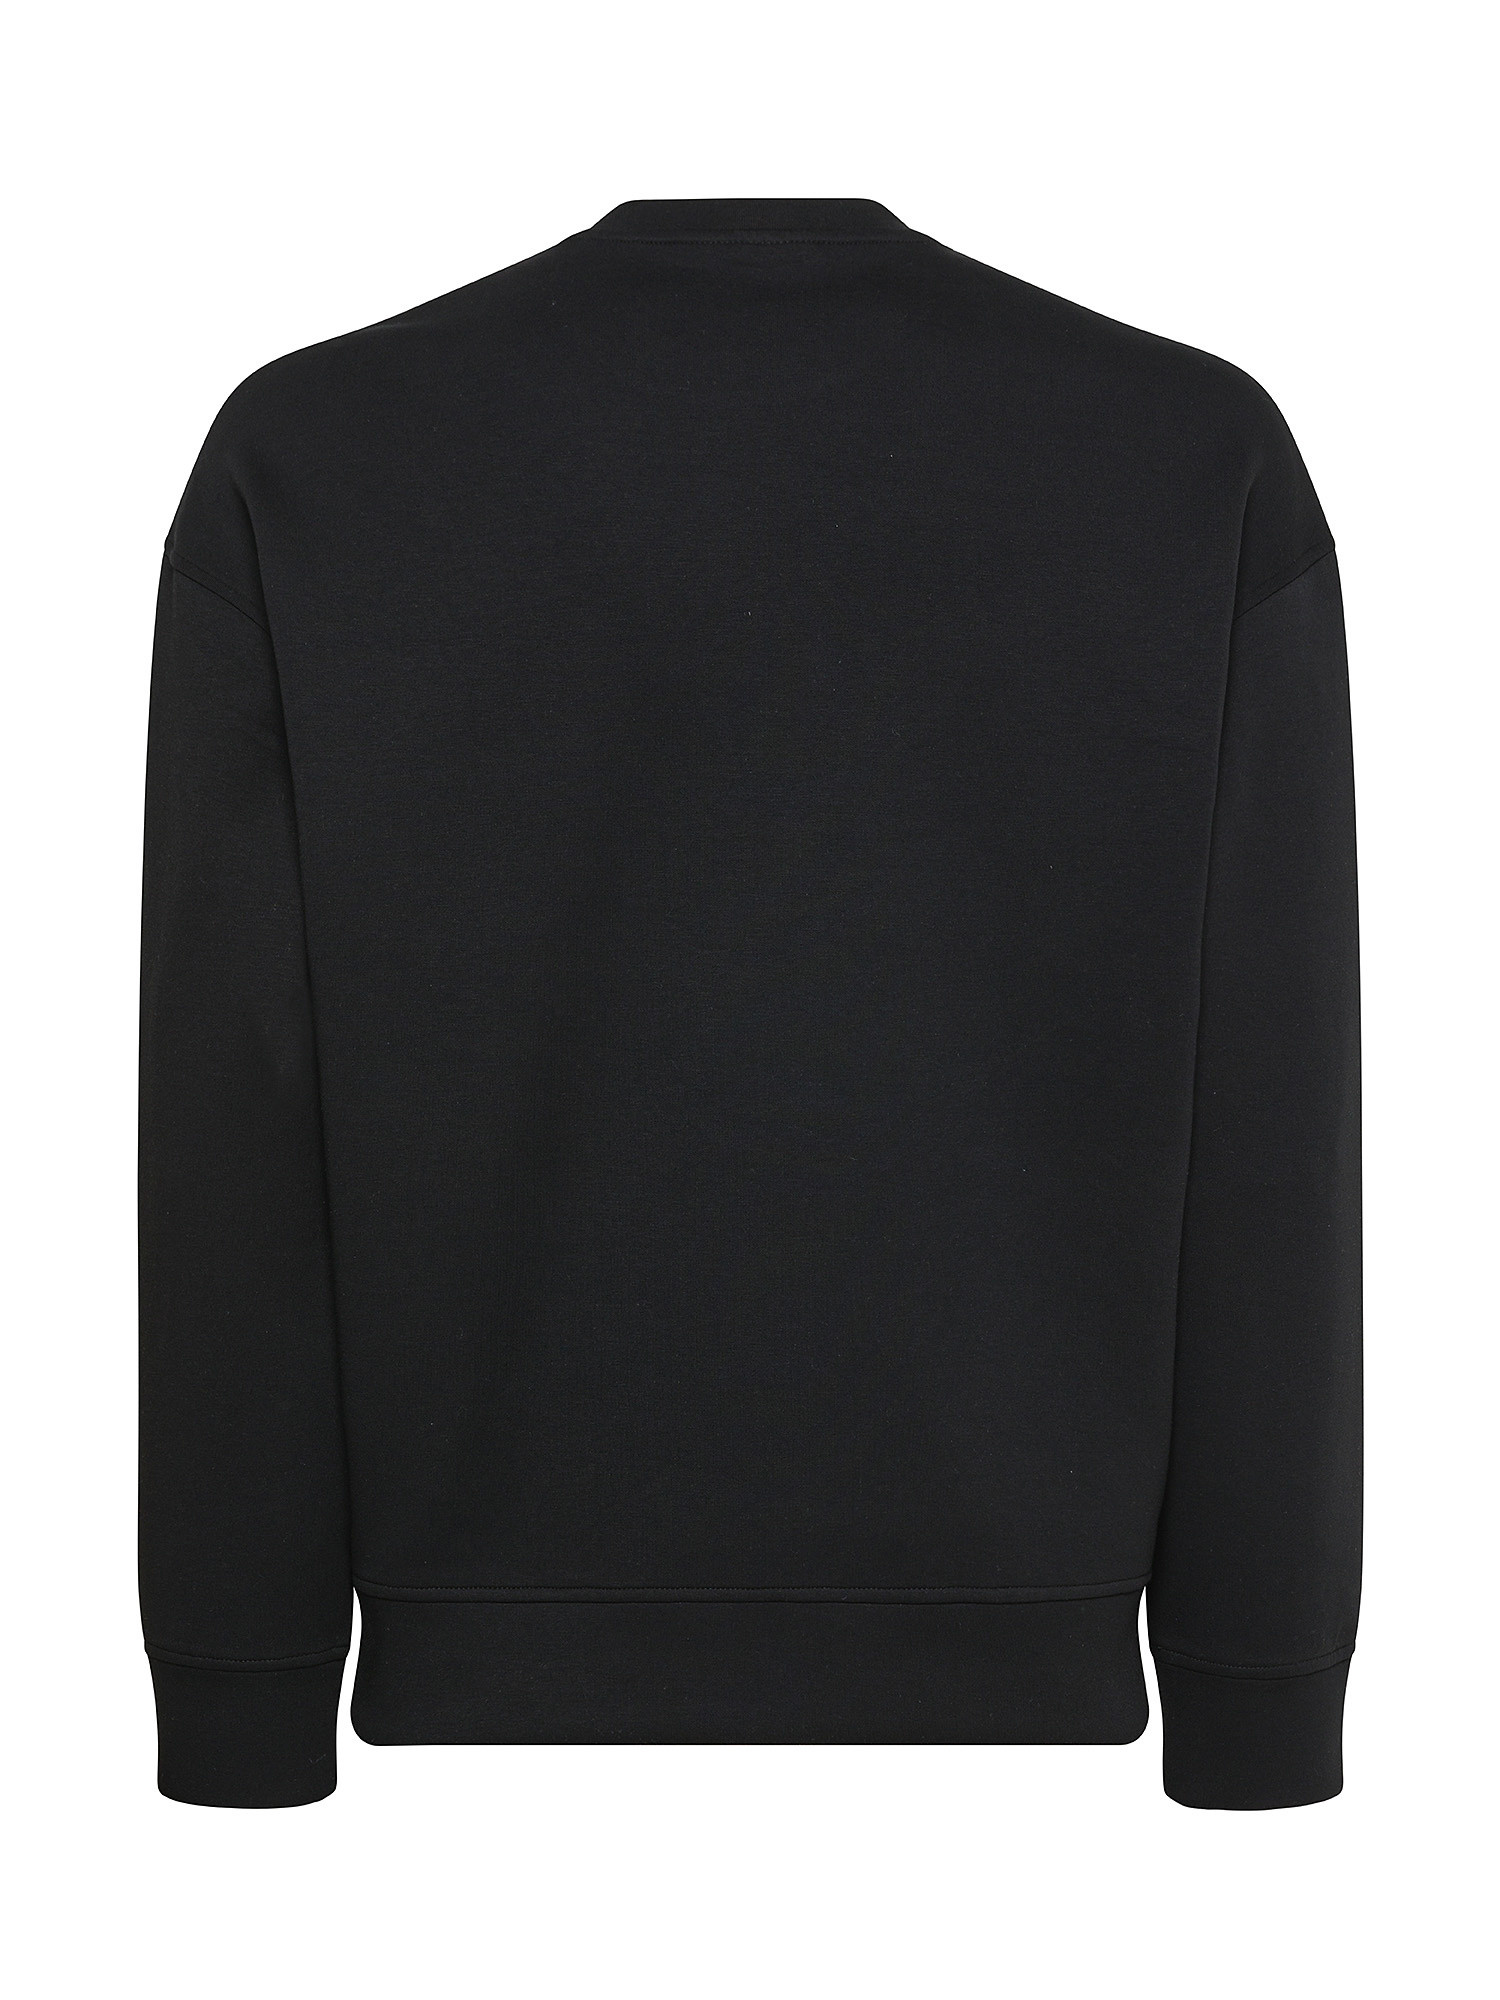 Emporio Armani - Sweatshirt with print, Black, large image number 1